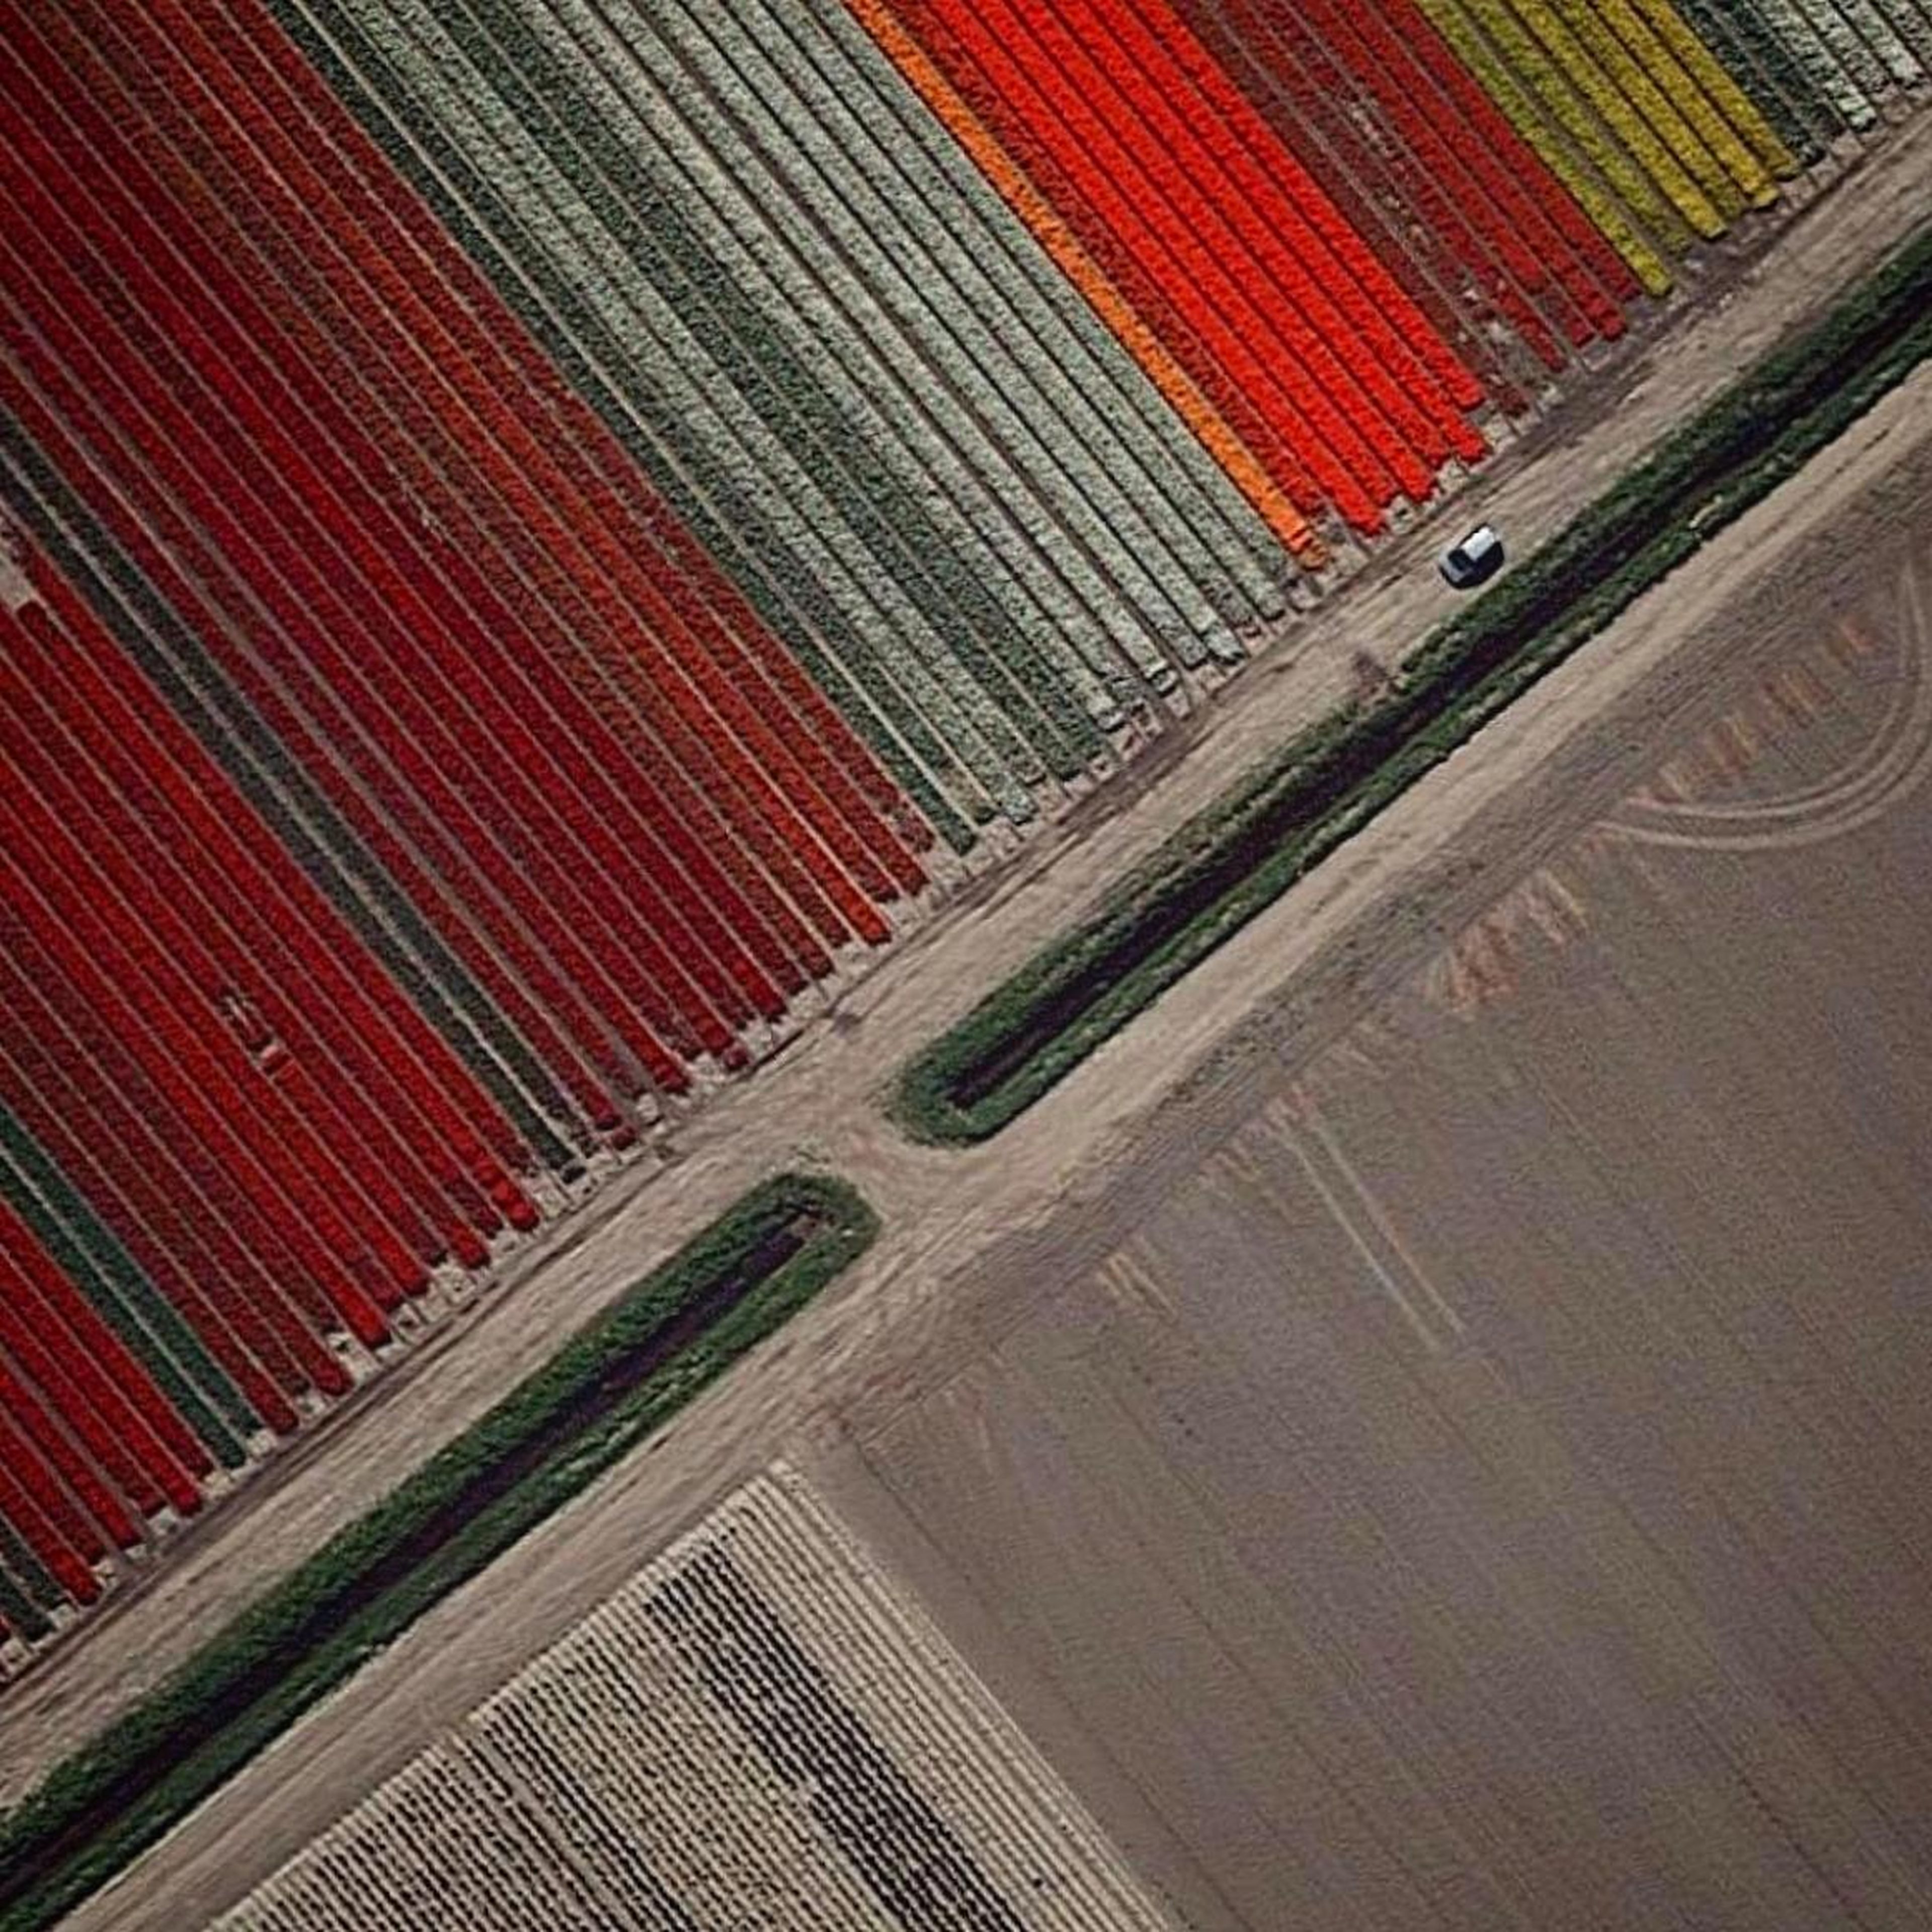 Fields in Middenmeer, Netherlands.